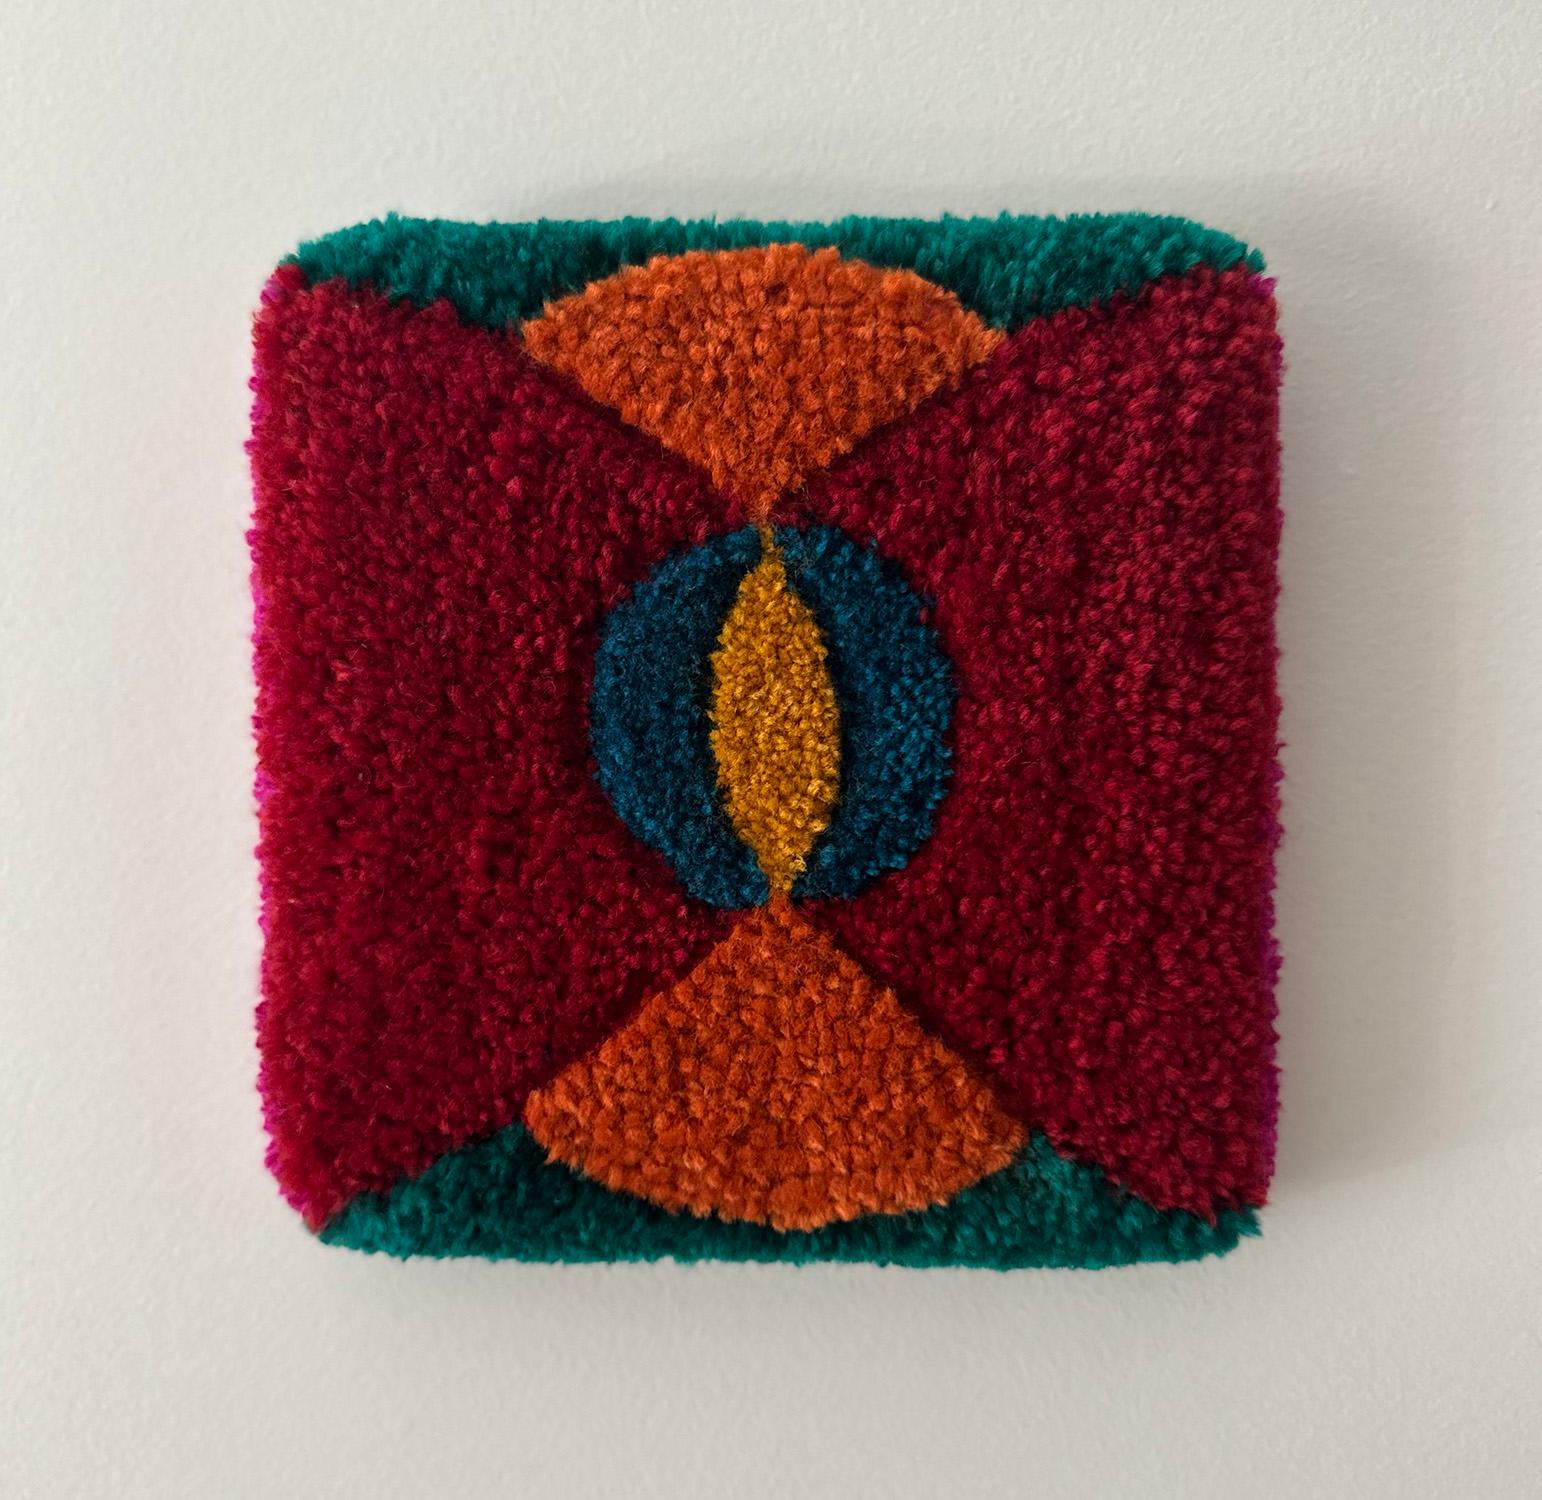 Birth, texture, textile, pattern, red, orange, blue, green, symmetrical - Sculpture by Ana Maria Farina